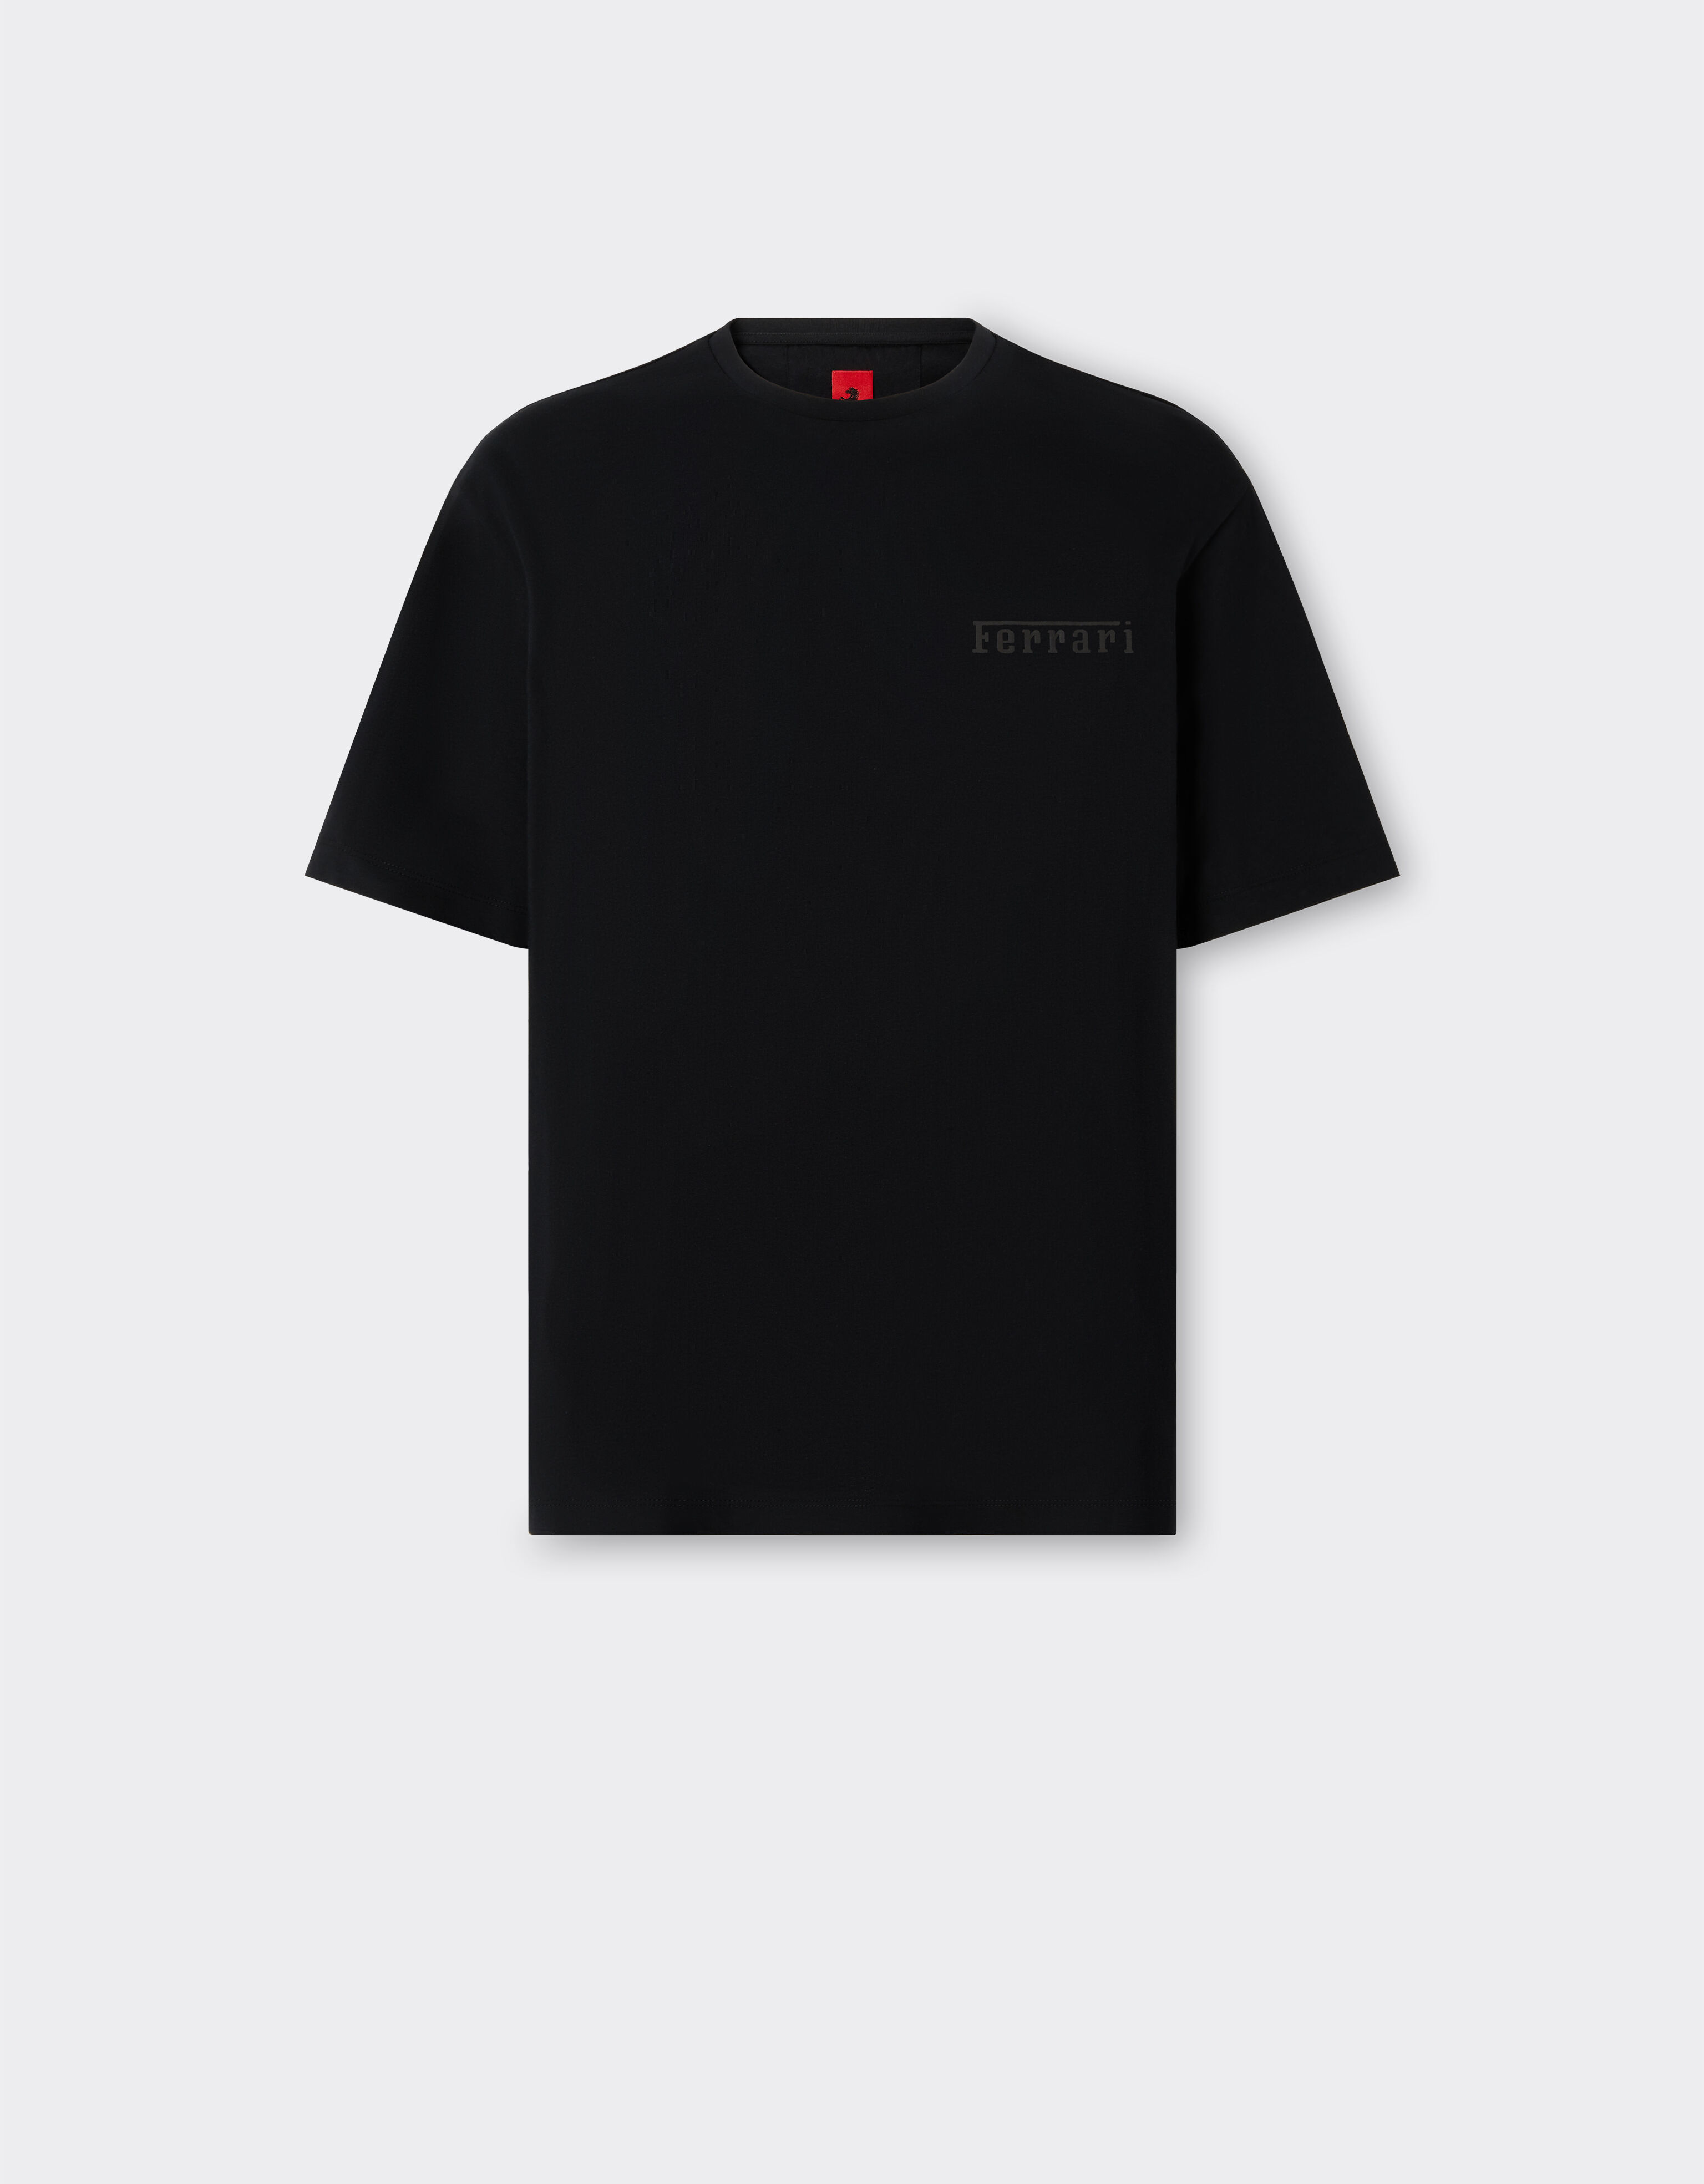 Ferrari Cotton T-shirt with Ferrari logo Black 48114f